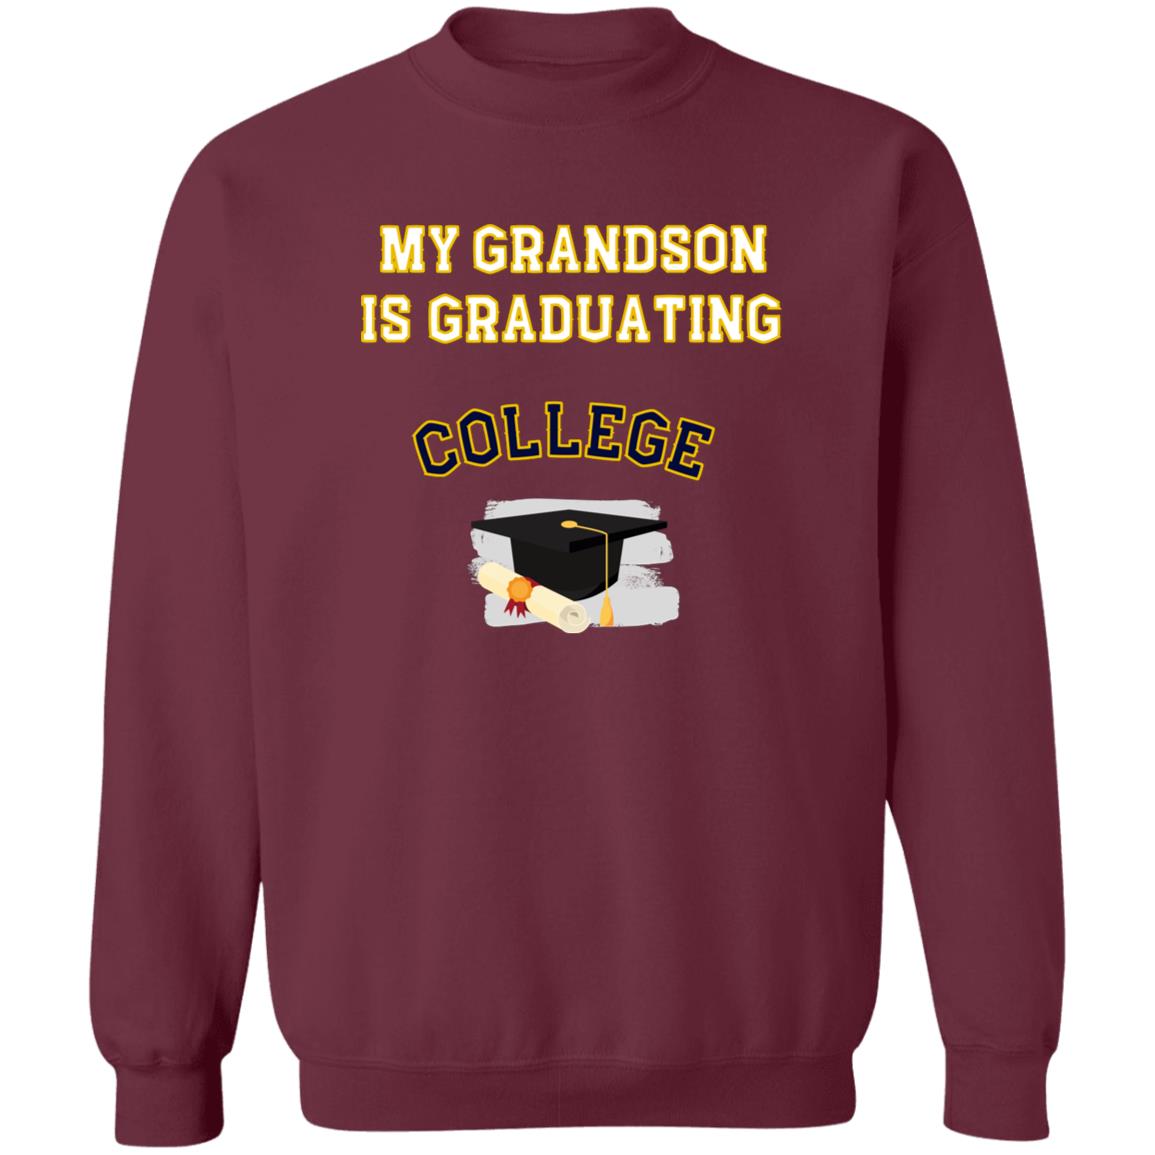 Grandson Graduating College Sweatshirt